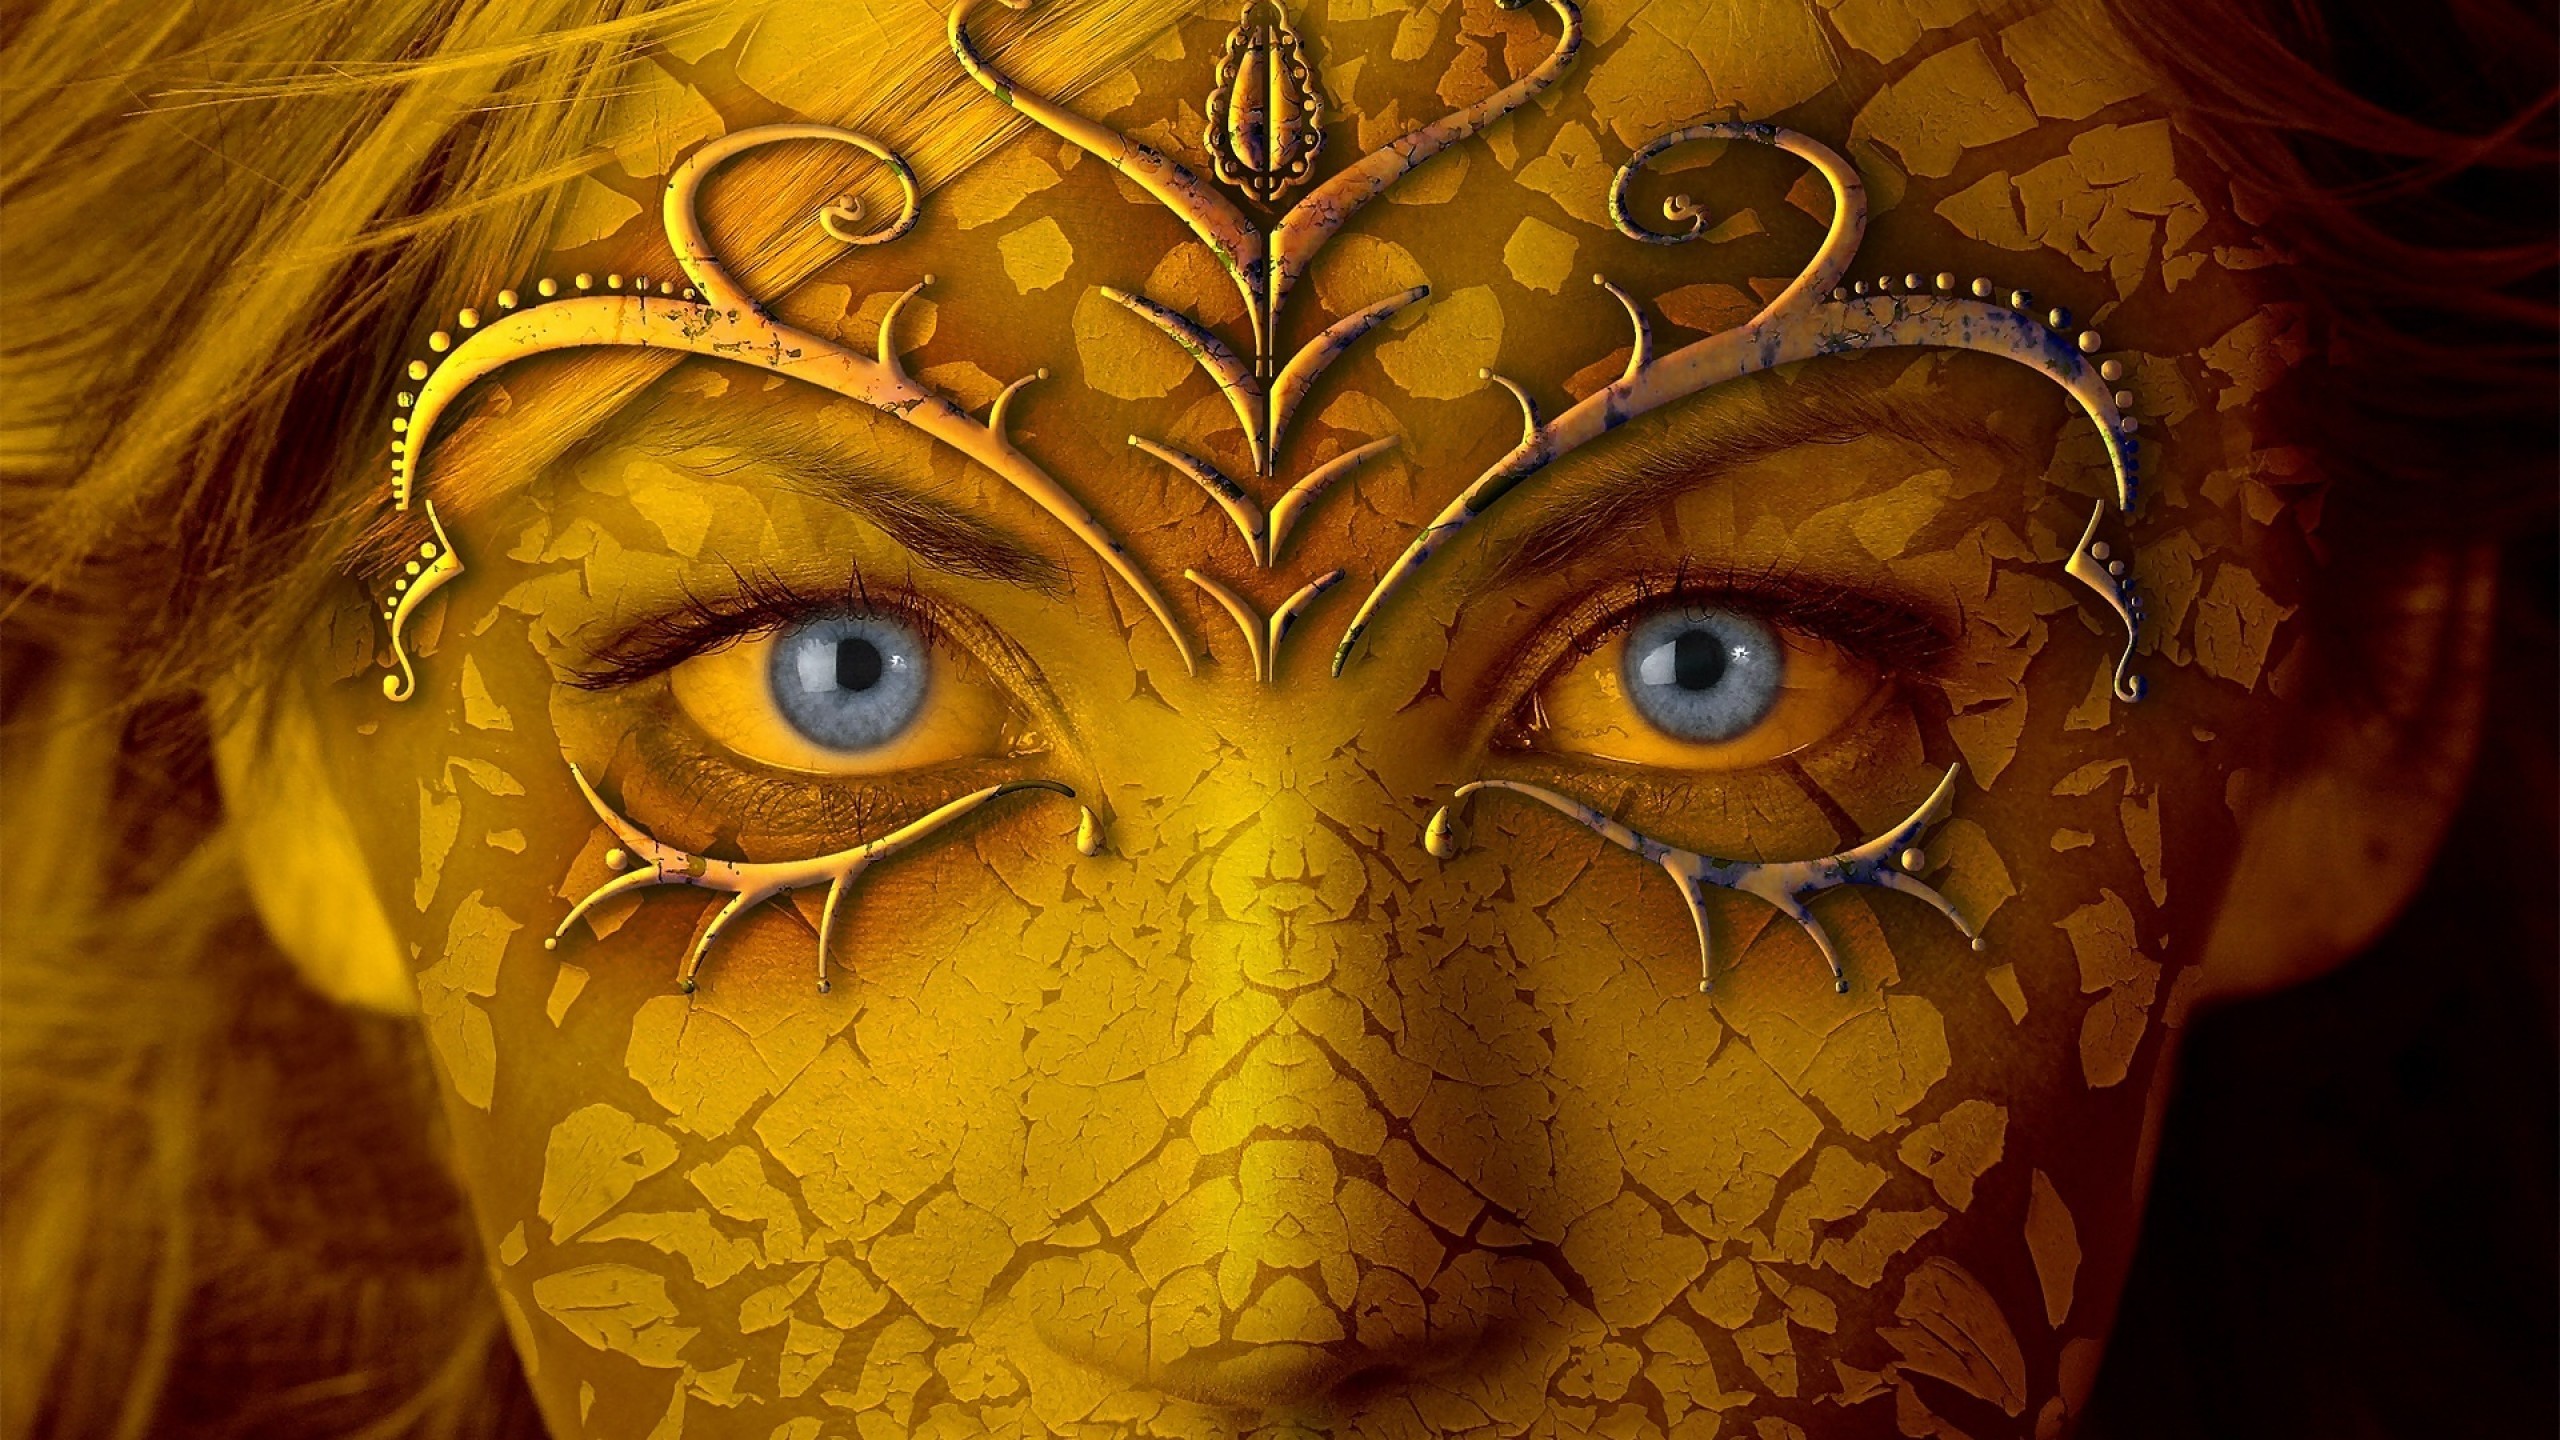 General 2560x1440 women fantasy art blue eyes fantasy girl face artwork closeup